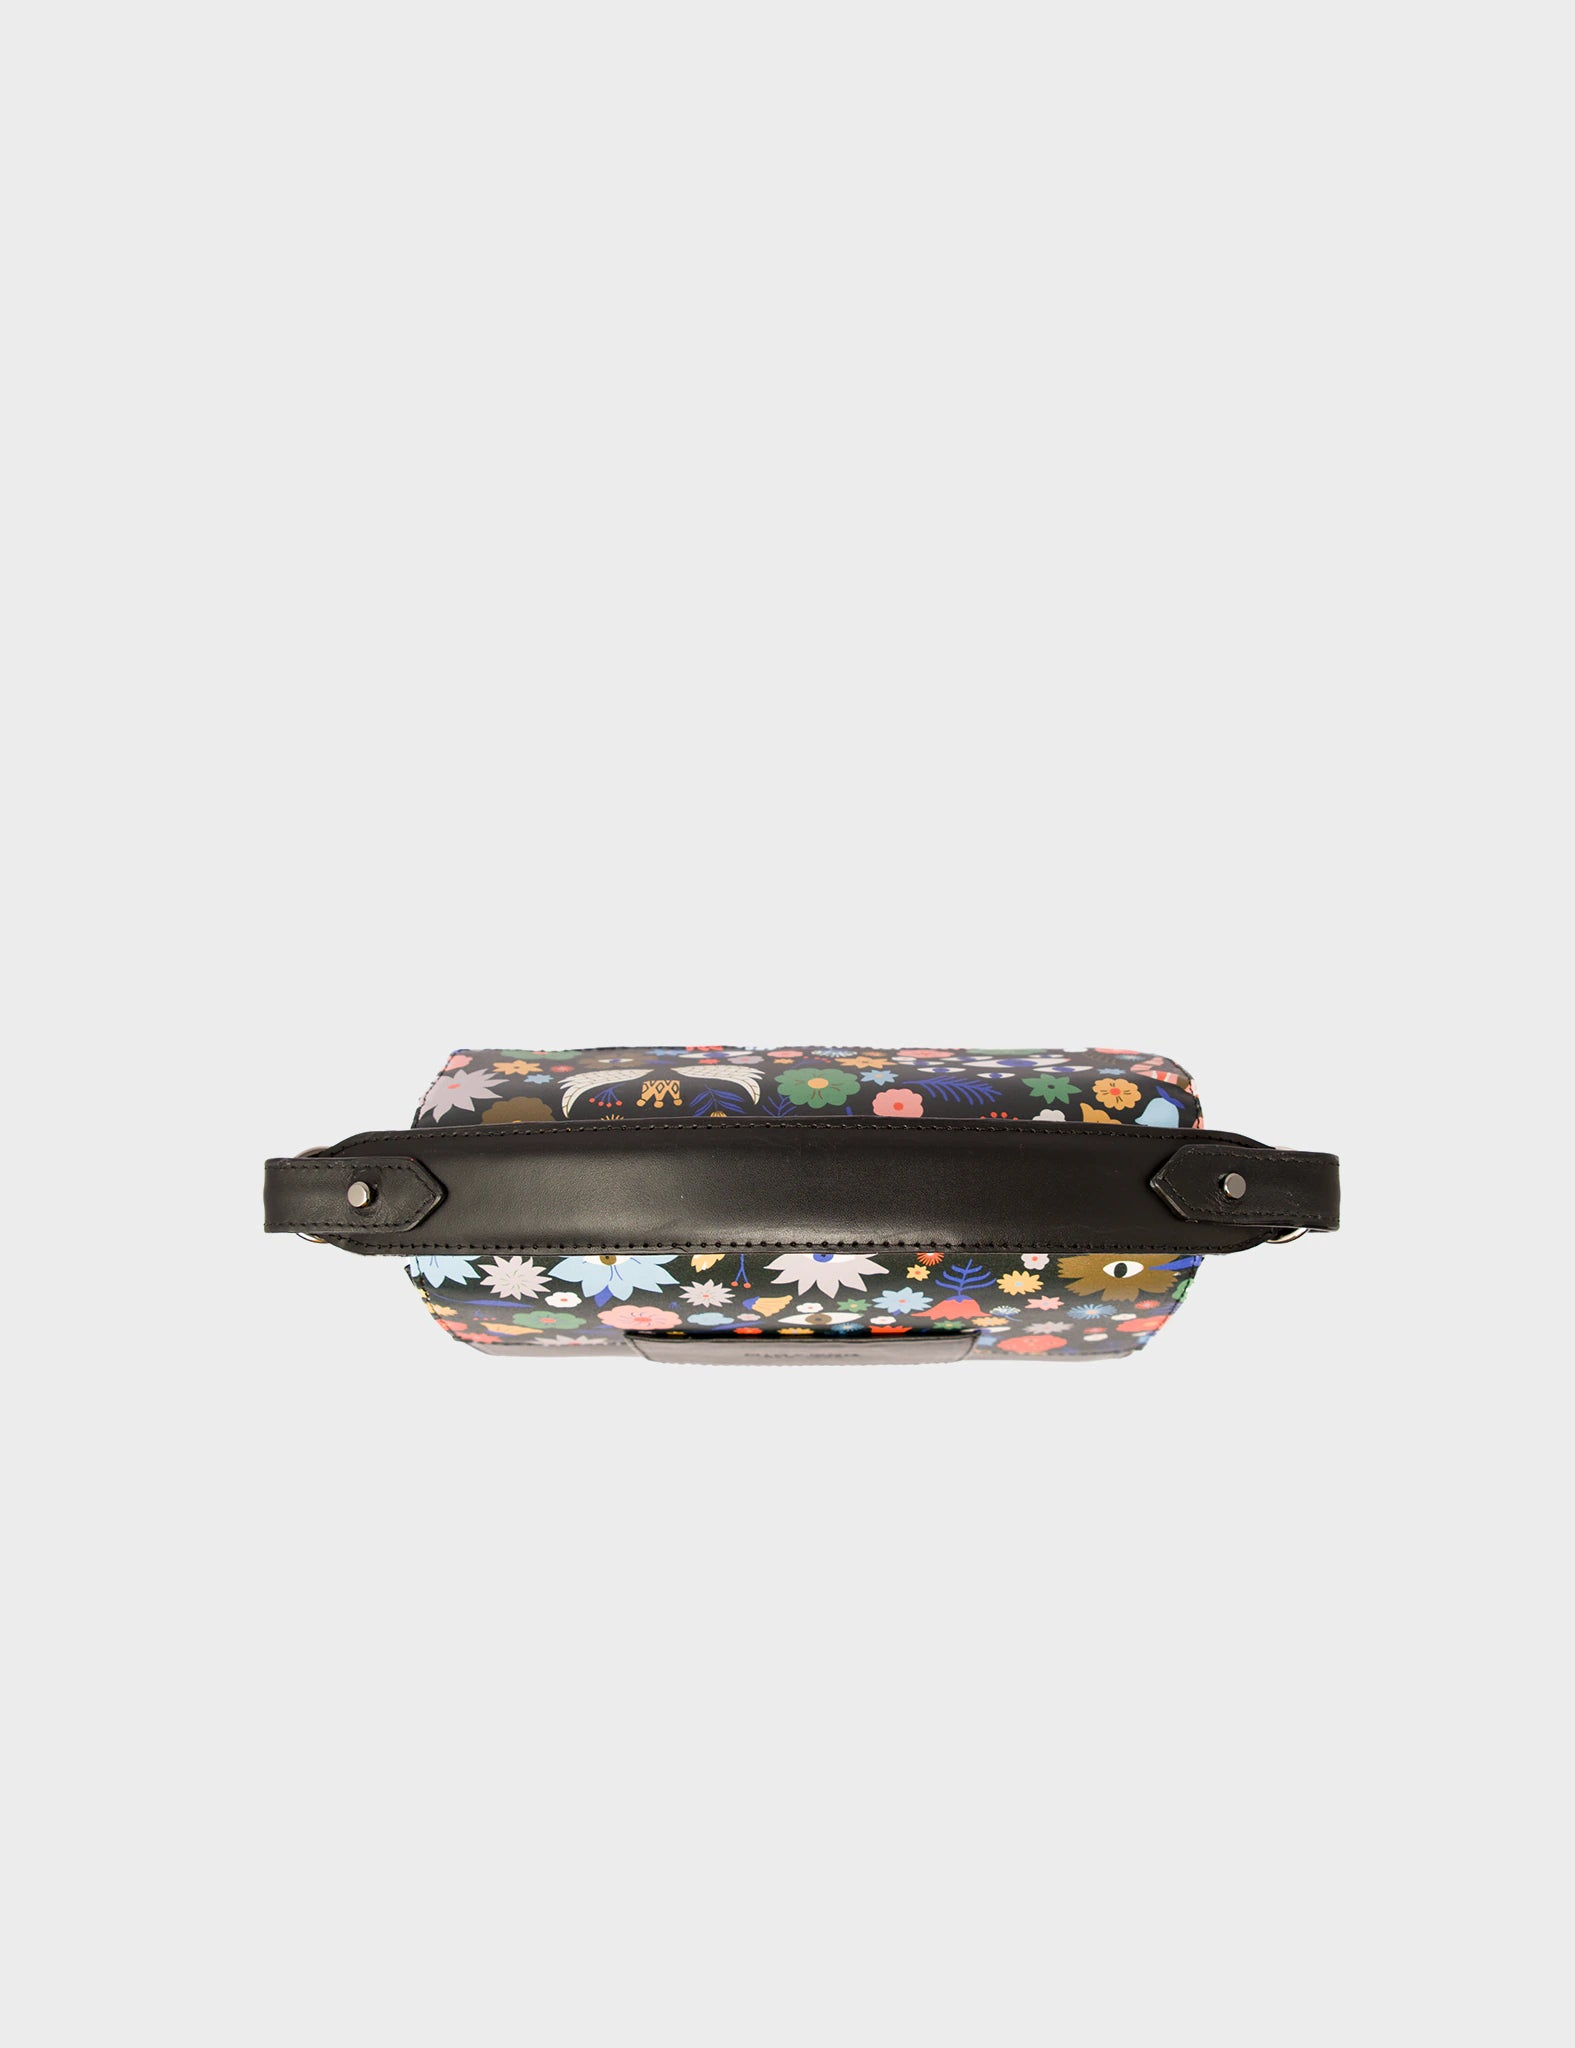 Mini Crossbody Handbag Manhattan Black Leather - Flowers Pattern Print - Top